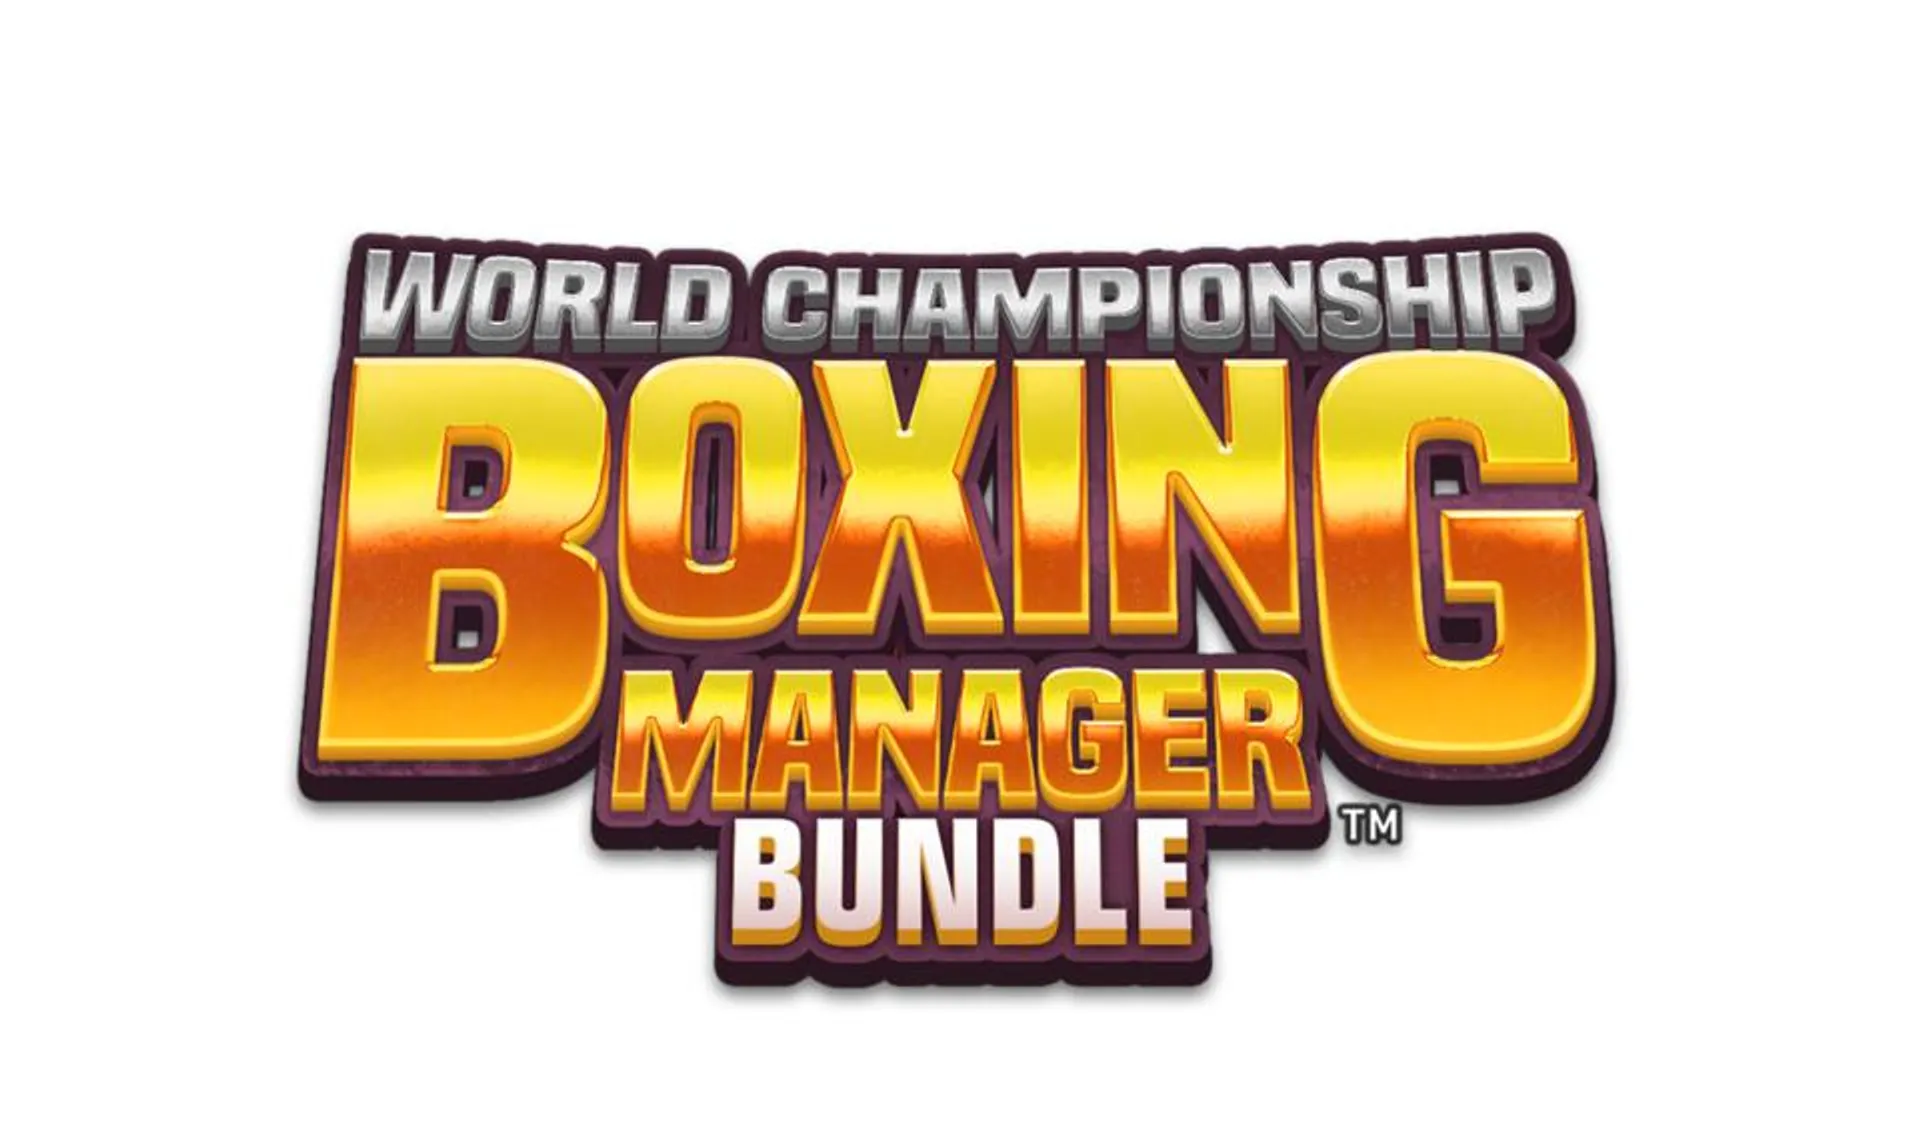 World Championship Boxing Manager Bundle